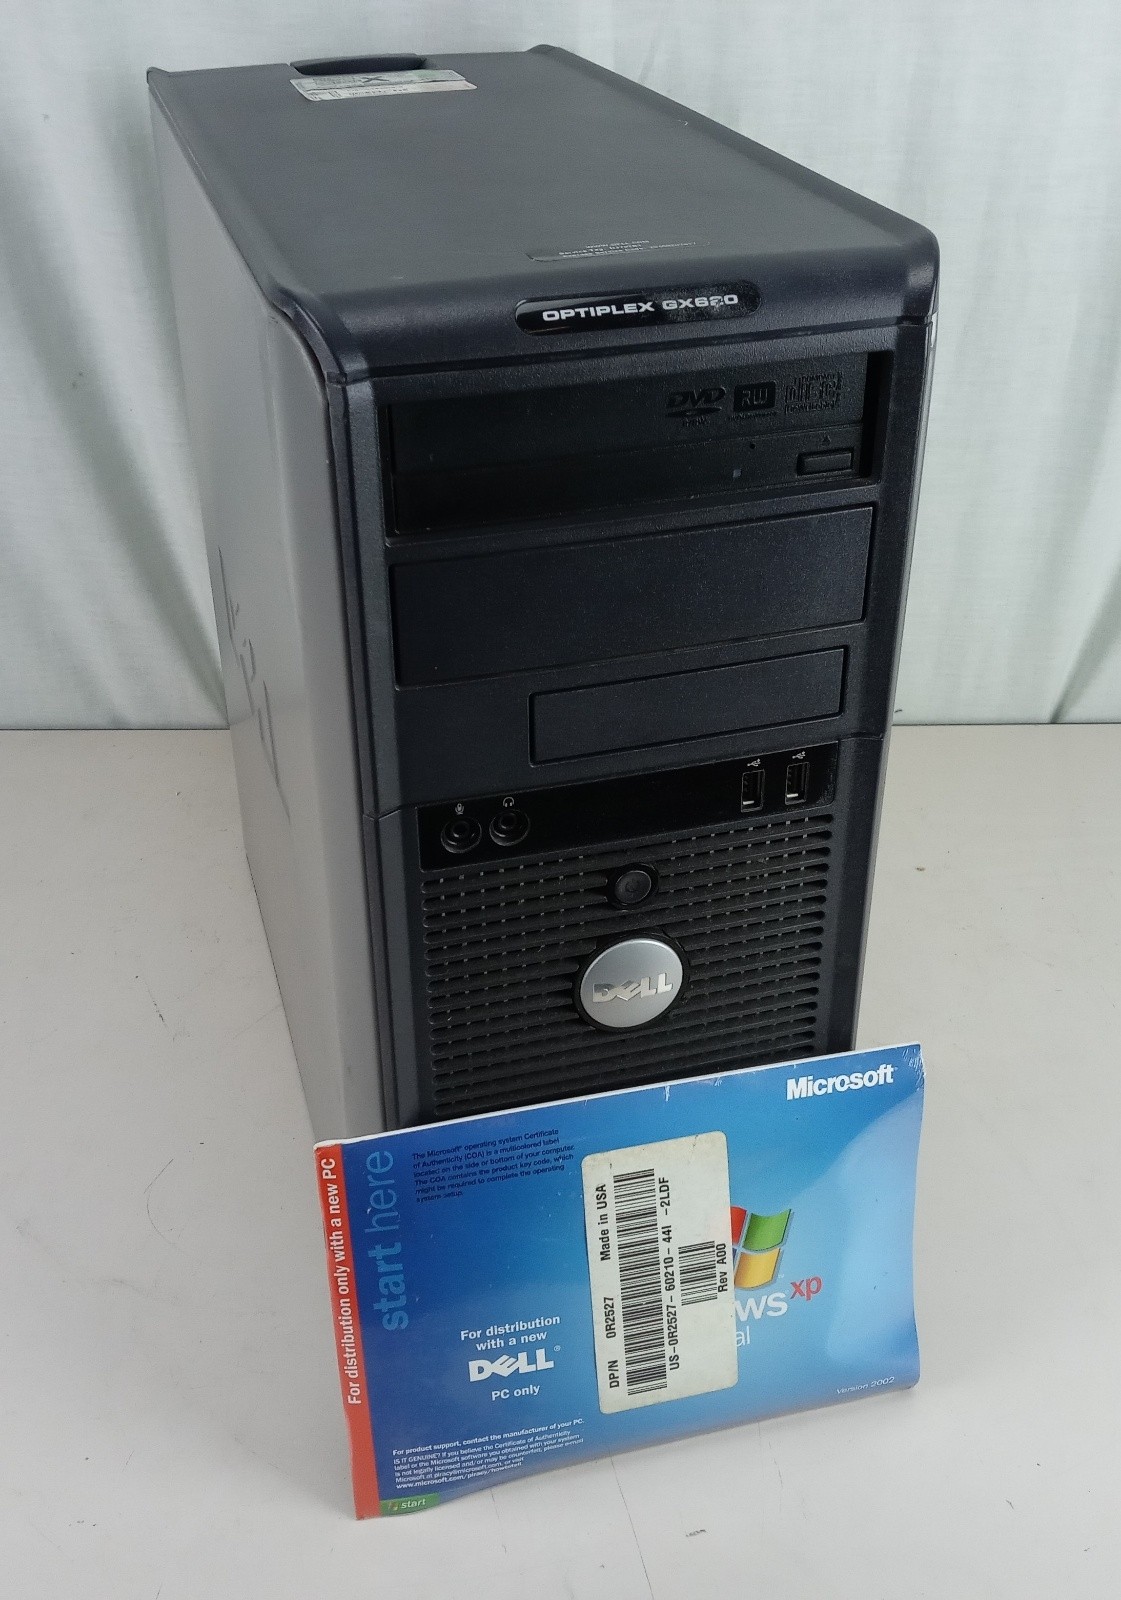 Dell Optiplex GX620 Pentium 4 HT 3.2GHz 4Gb 250Gb No OS (XP Pro Disc)